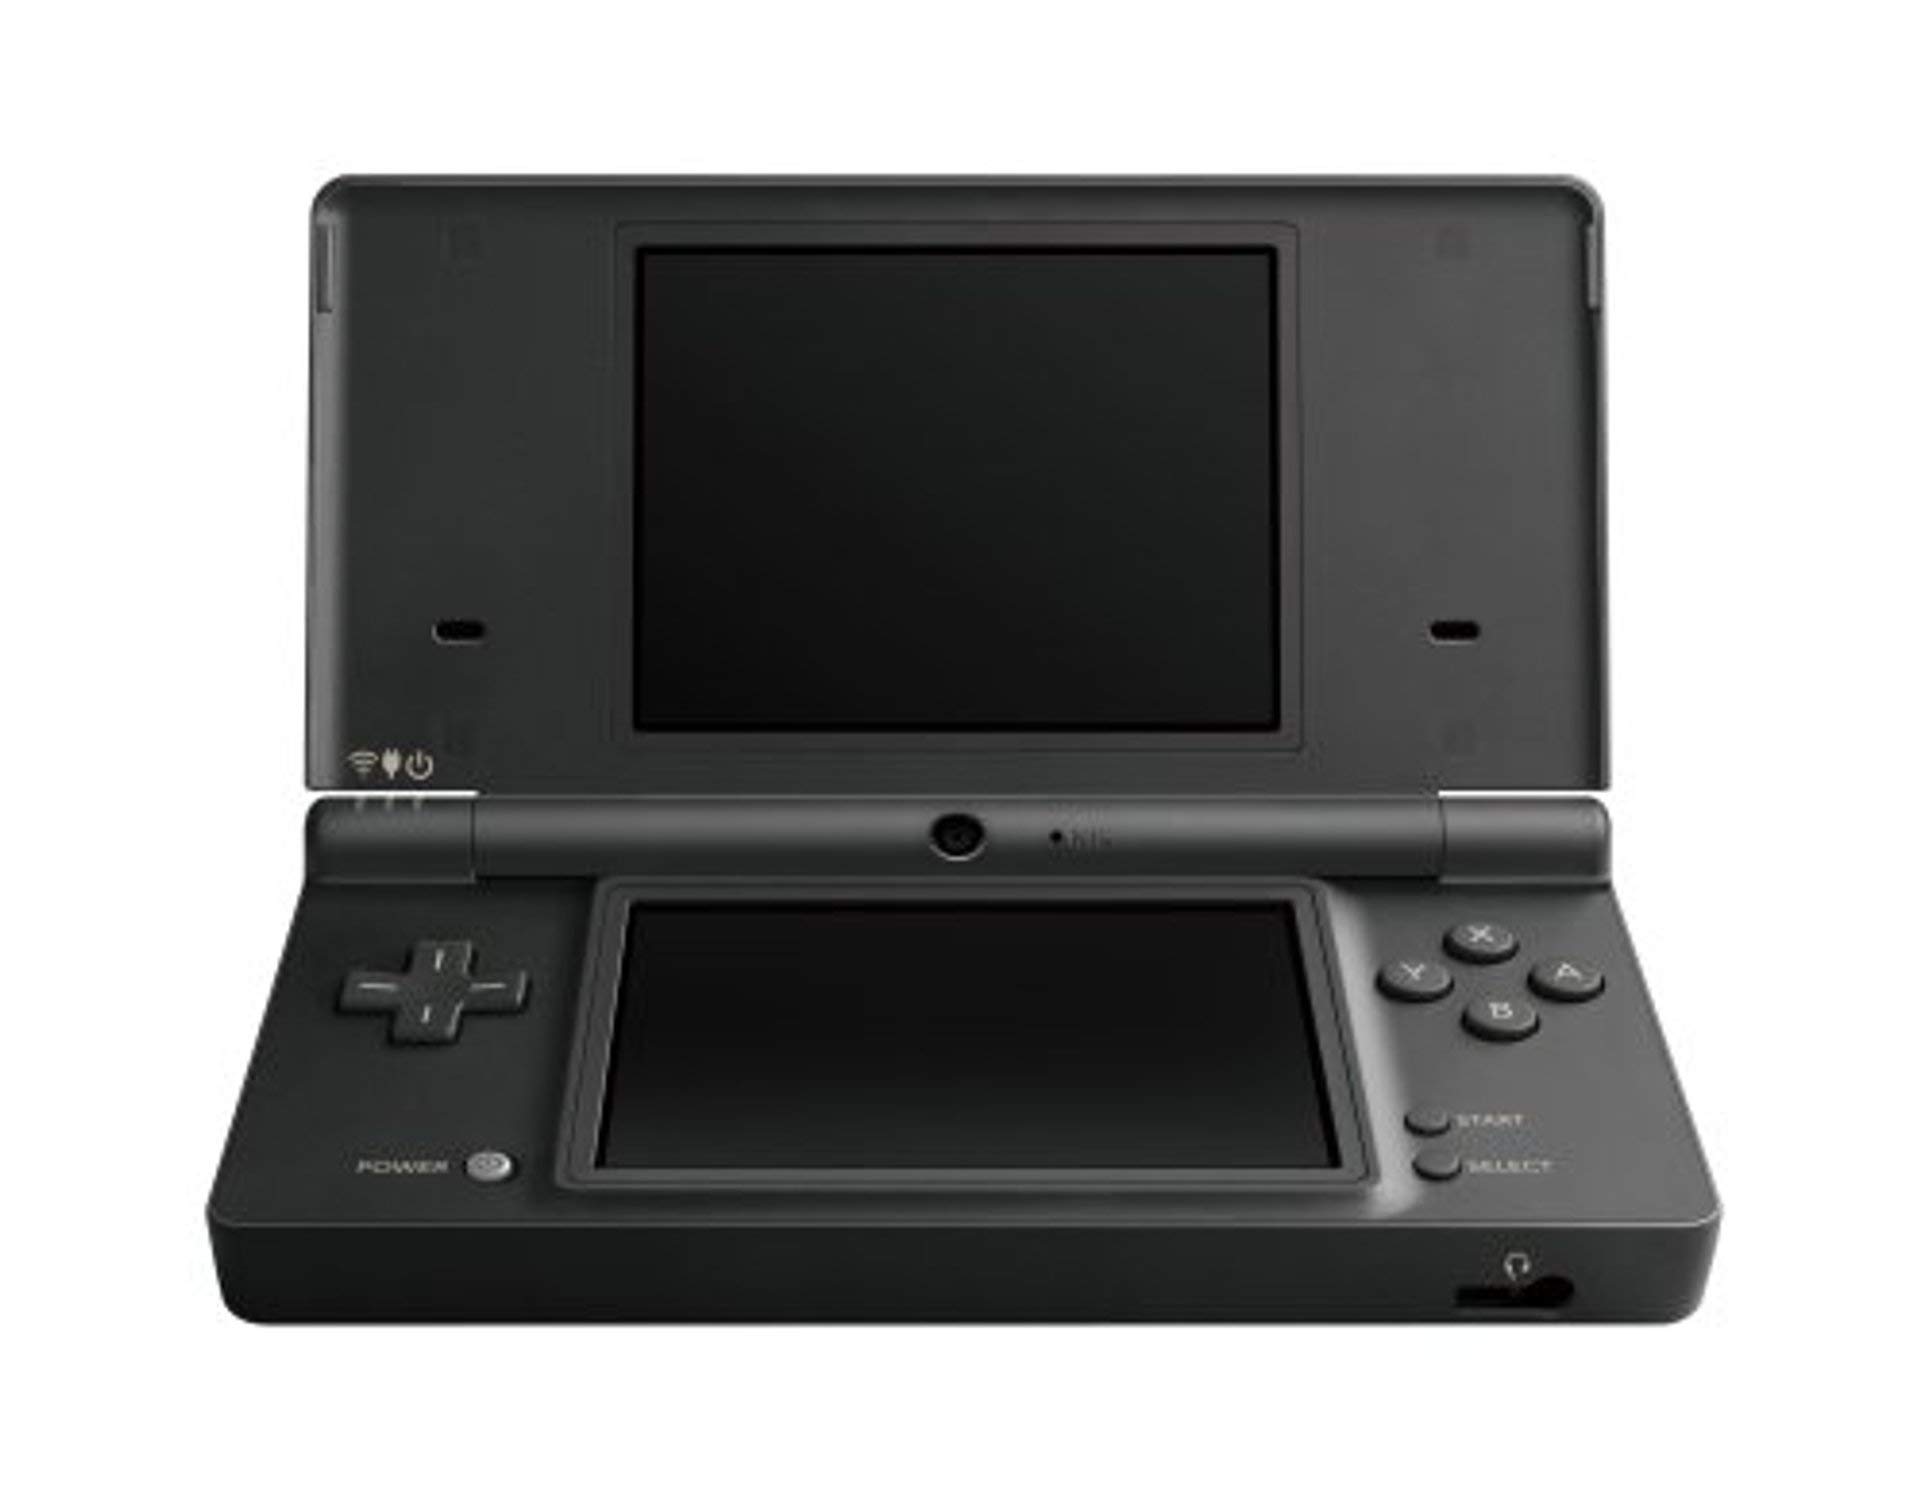 Nintendo DSi - Handheld game console - black (Renewed)